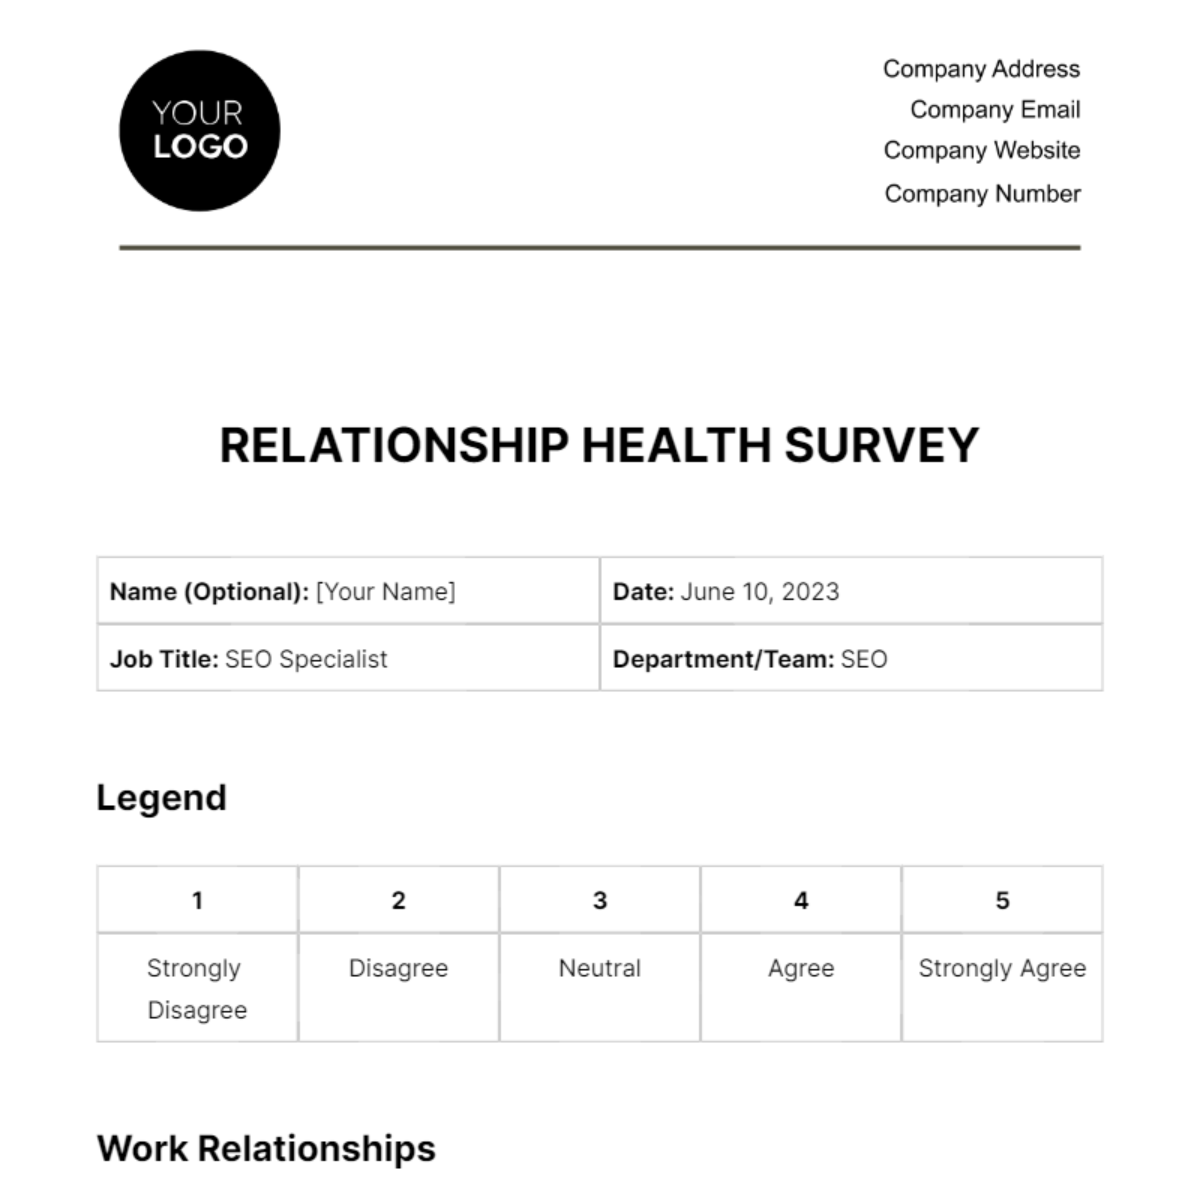 Relationship Health Survey HR Template